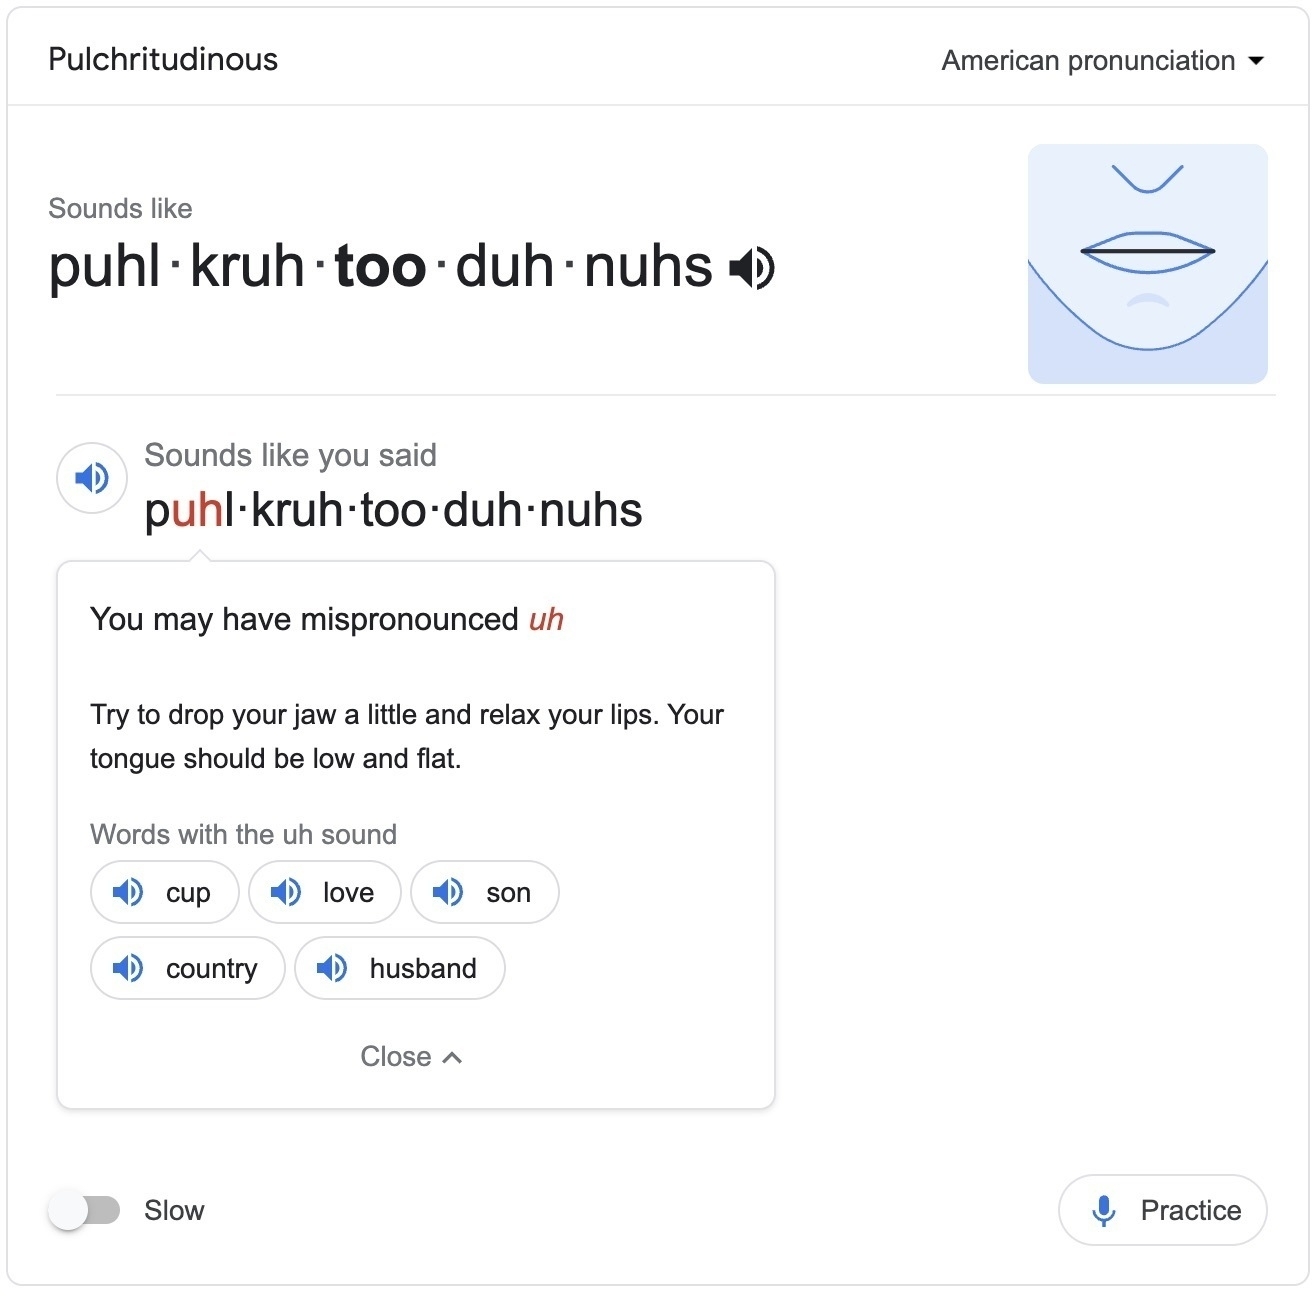 google pronunciation teacher tool screenshot, word is “Pulchritudinous”